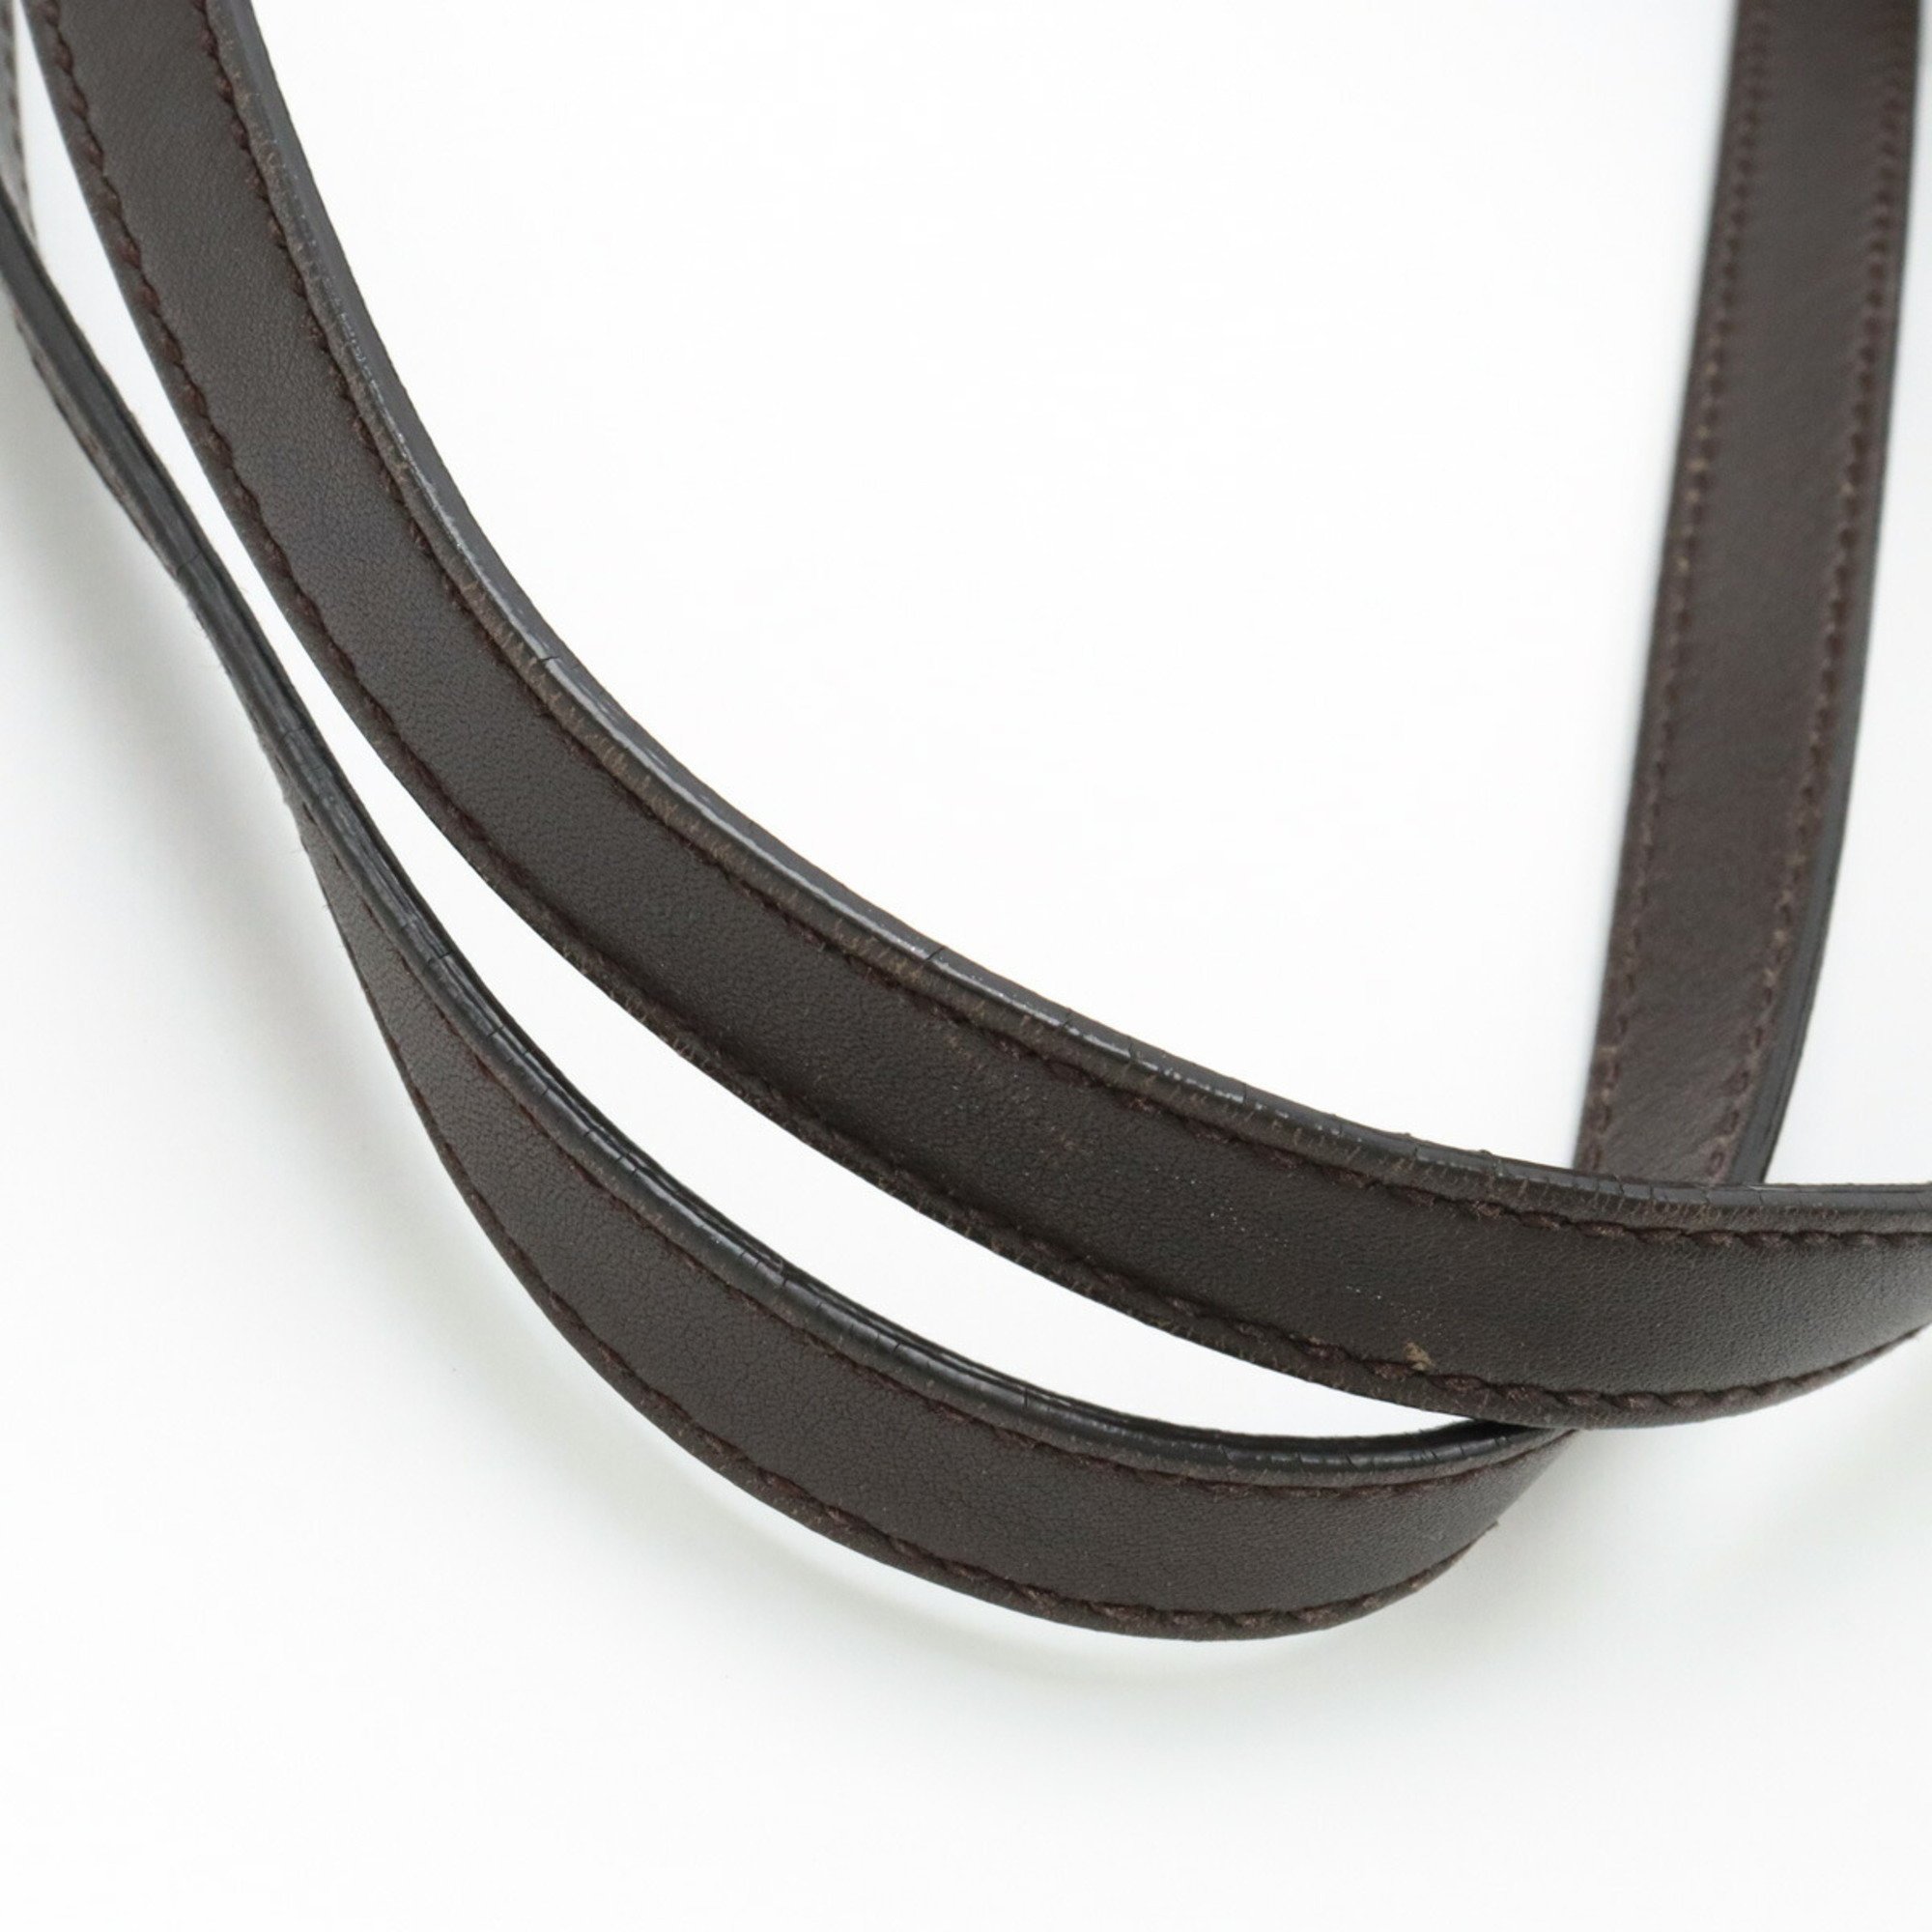 GUCCI GG Supreme Tote Bag Shoulder PVC Leather Beige Dark Brown 388929